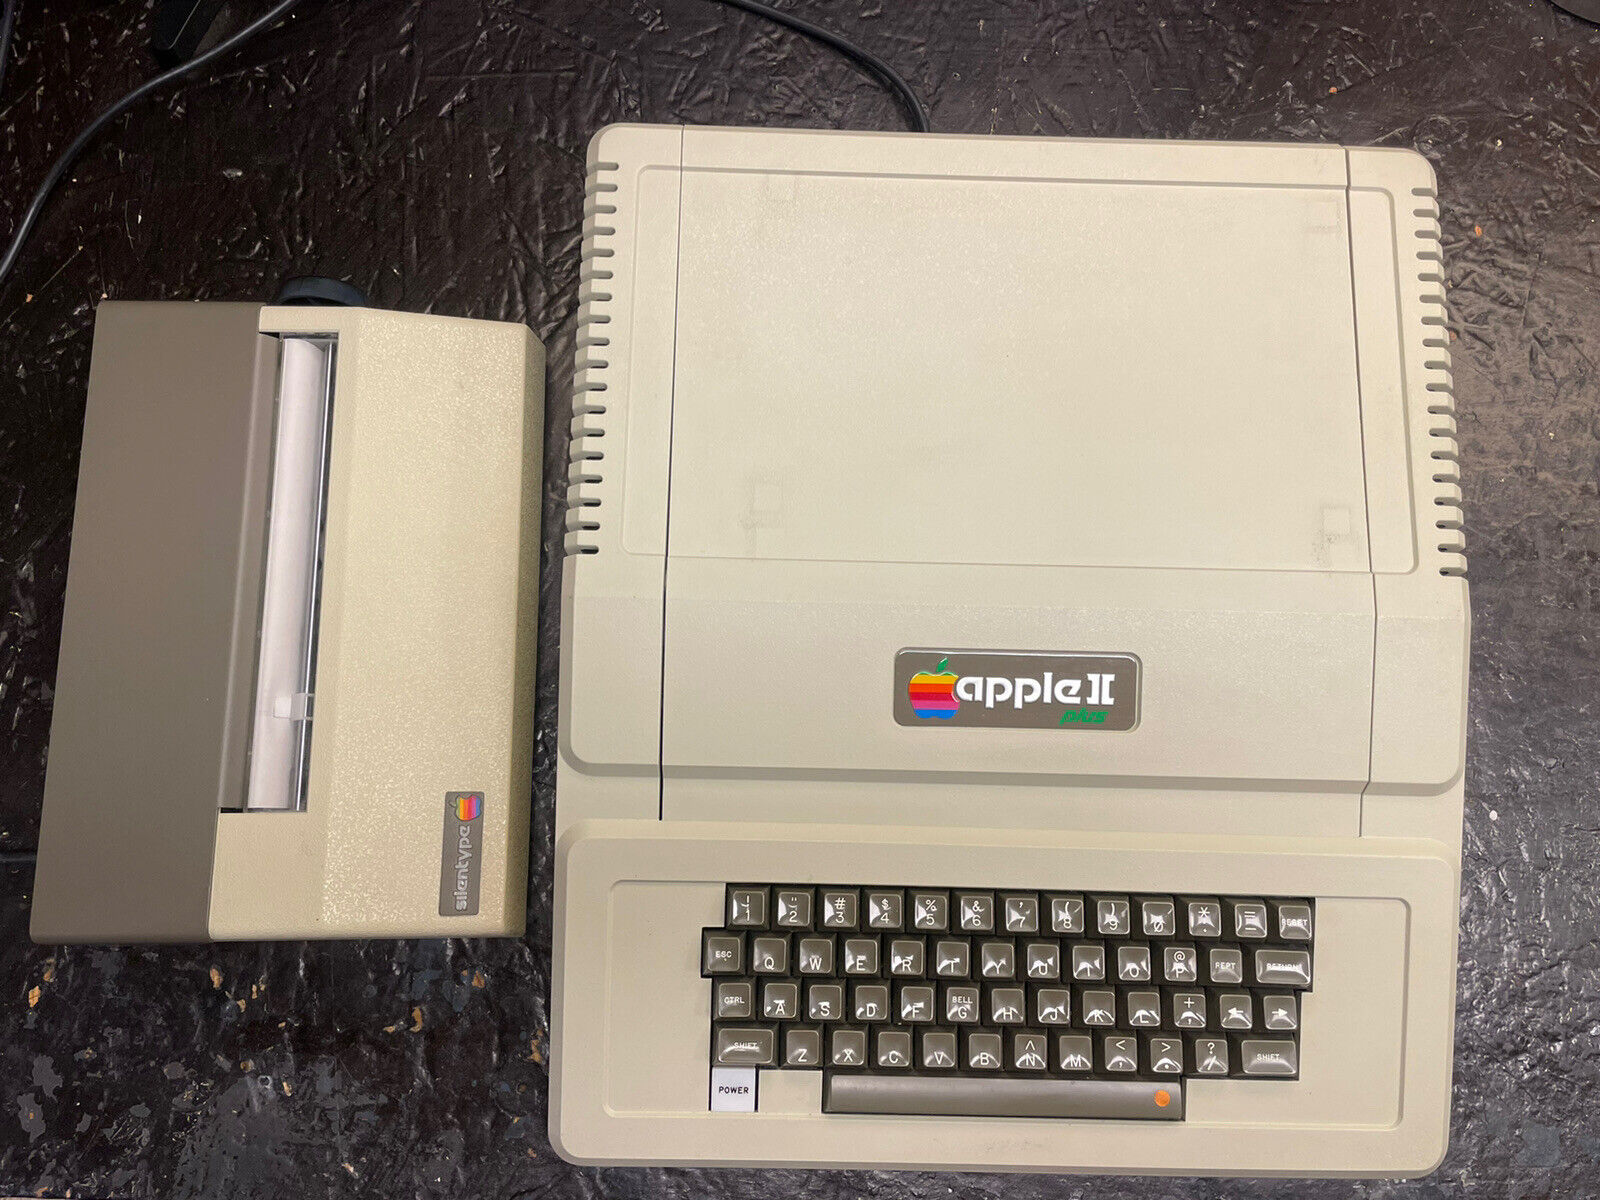 Apple 2 Plus vintage computer with sylentype printer